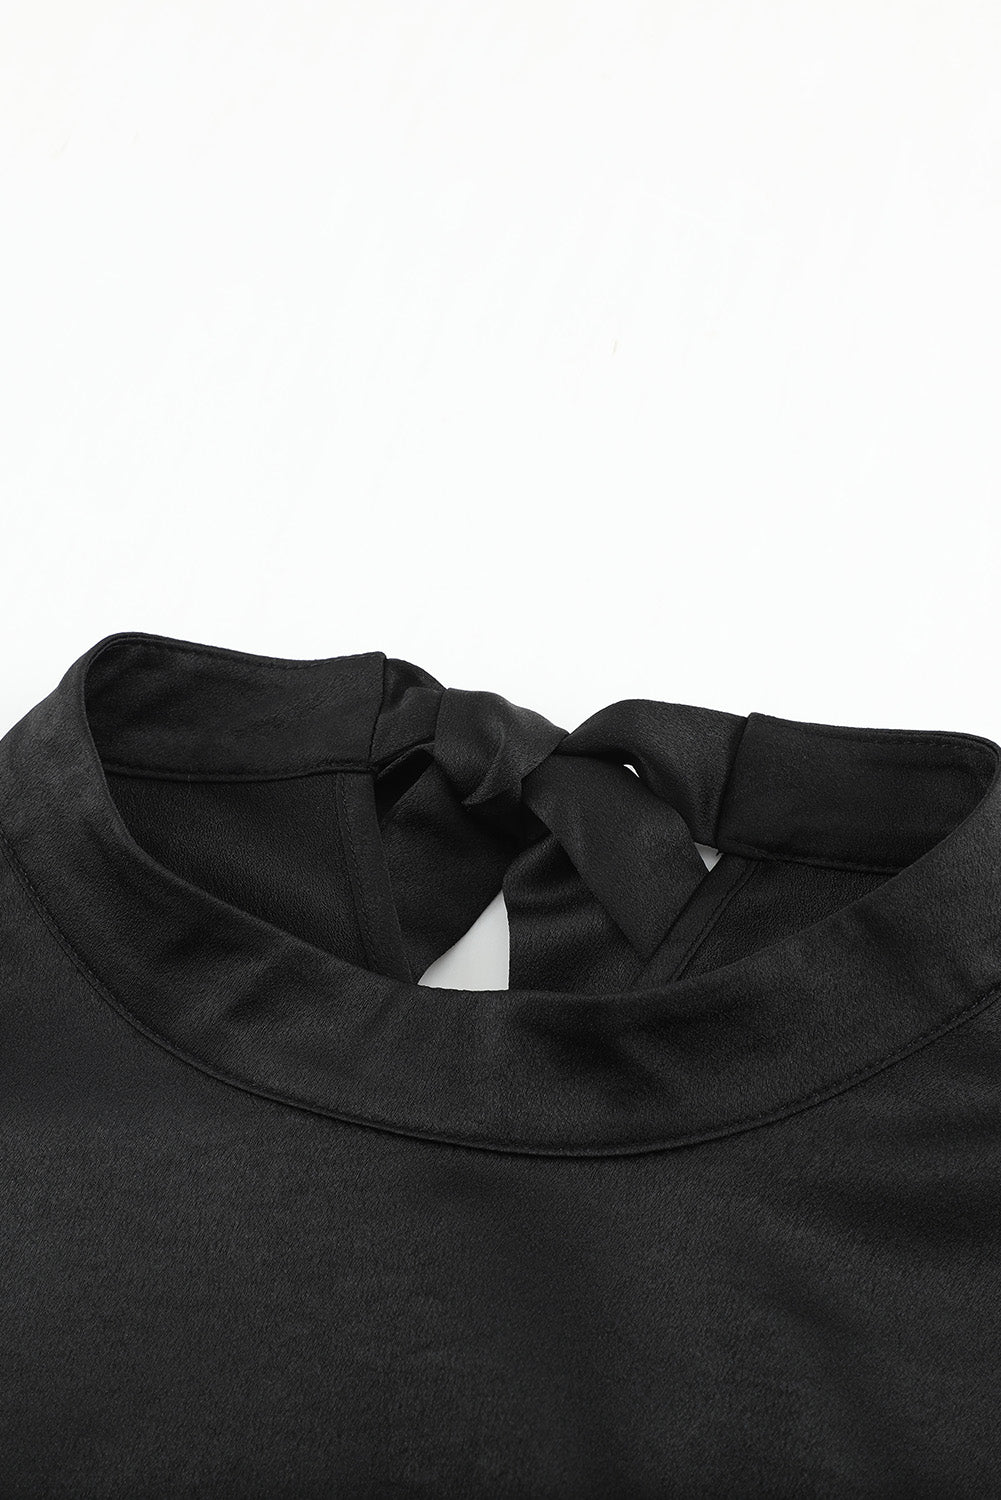 Black lace shirt - blouse